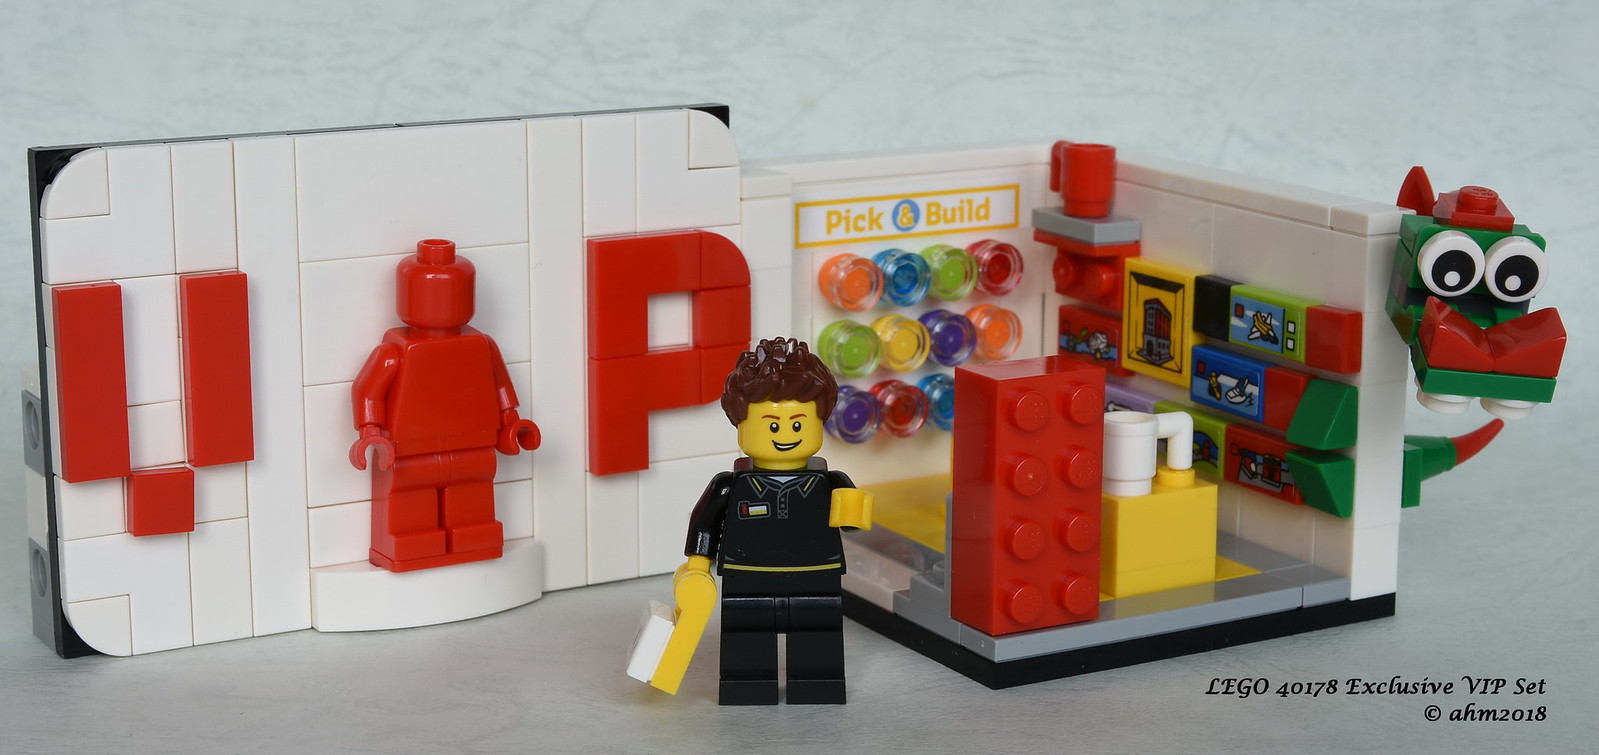 LEGO 40178 Exclusive VIP | LEGO 40178 Set … | Flickr